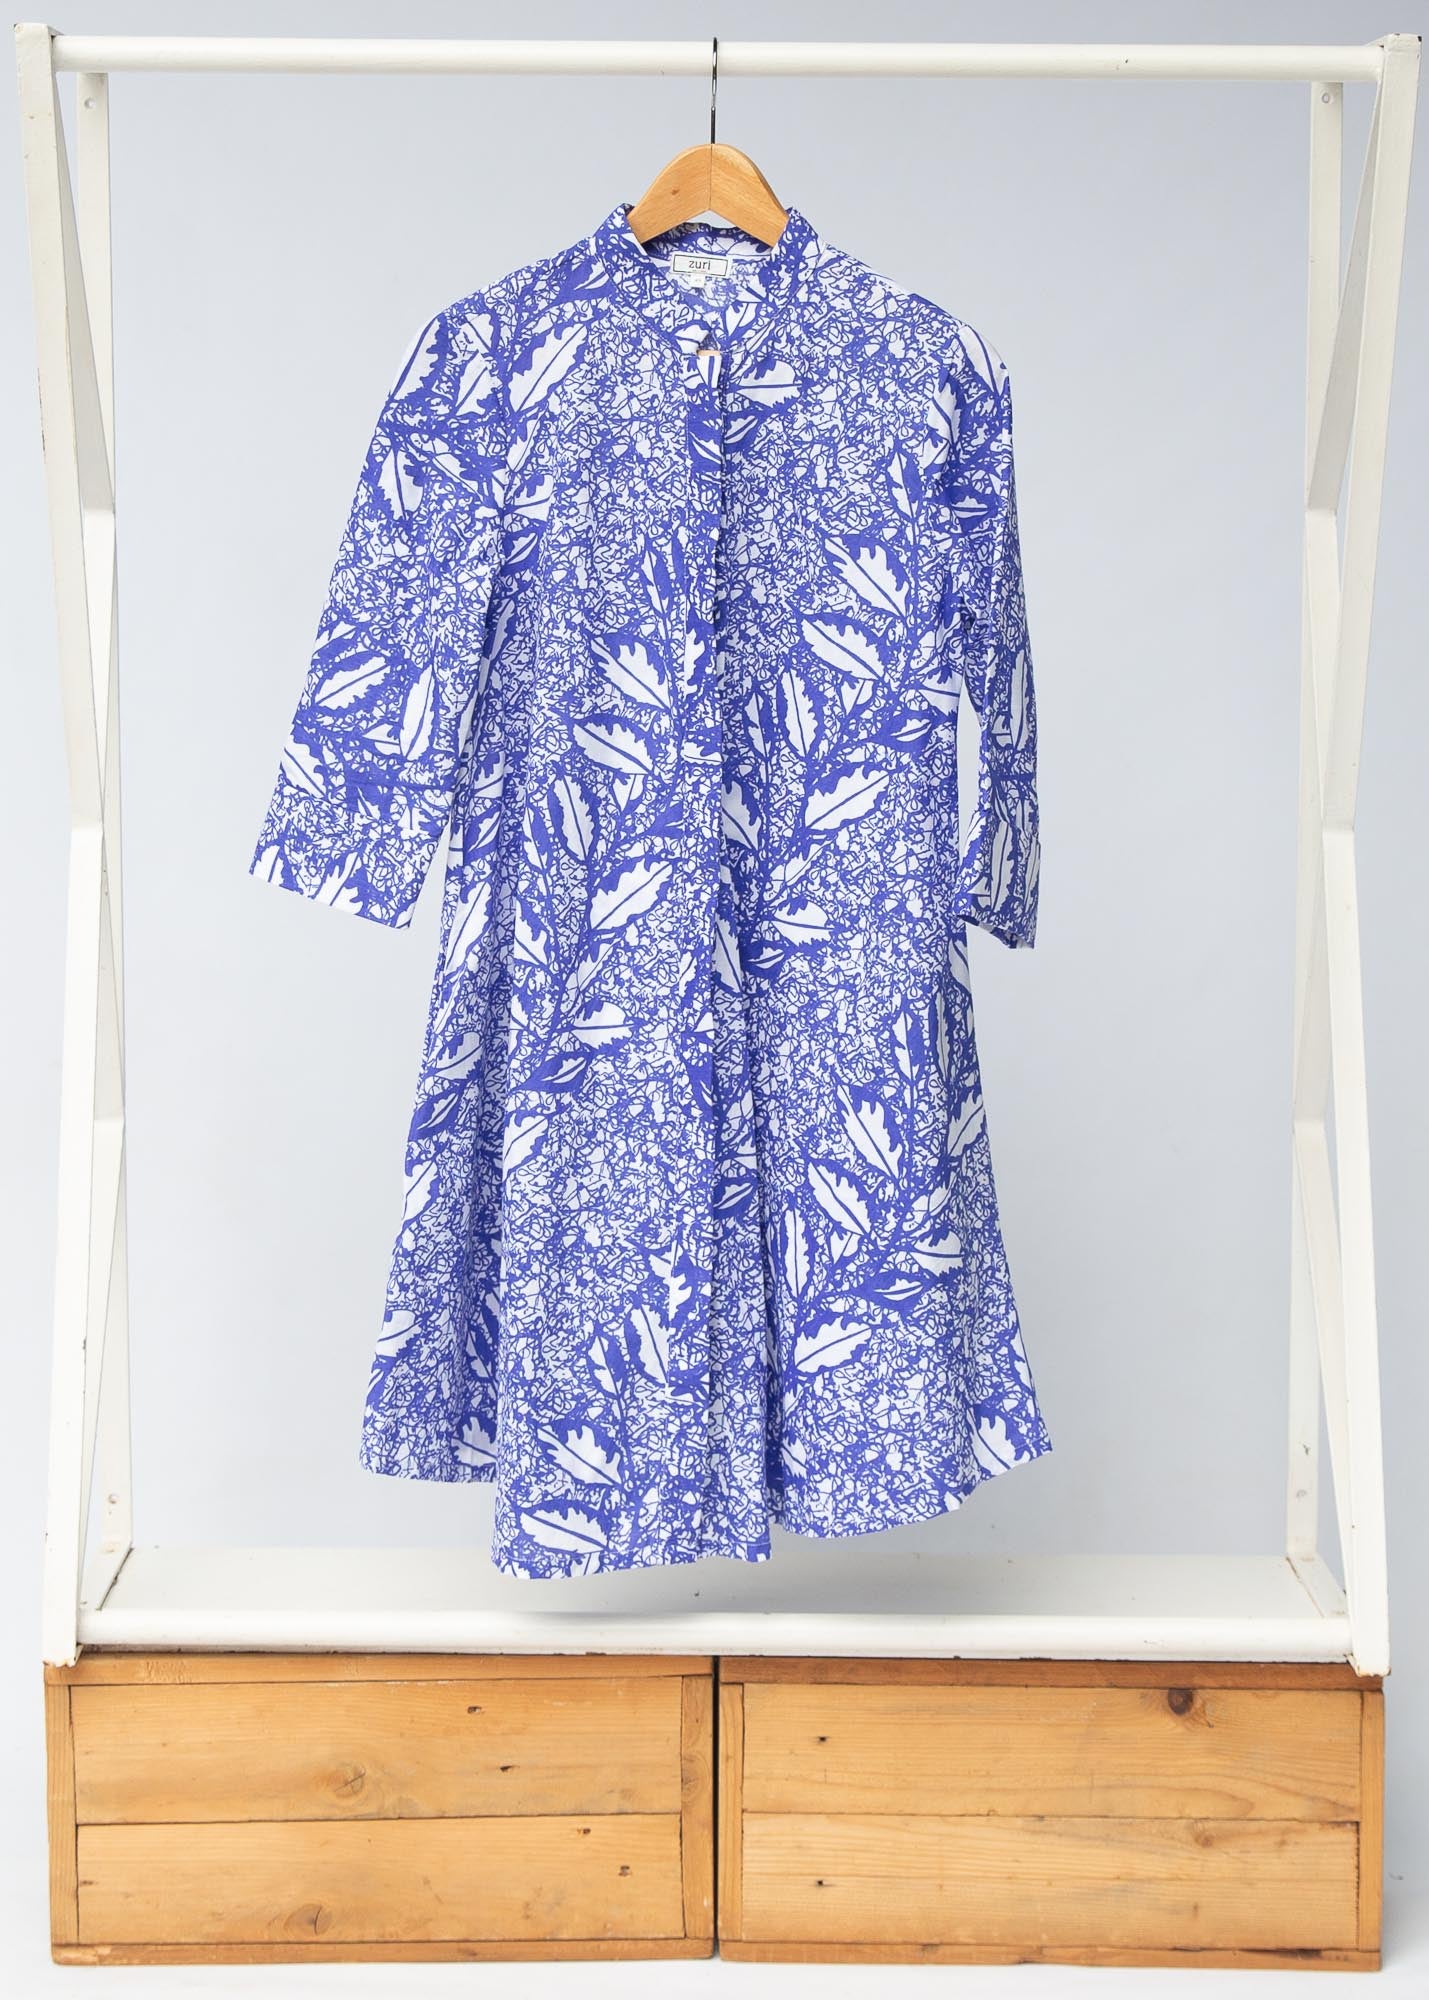 Display of violet and white leaf print dress